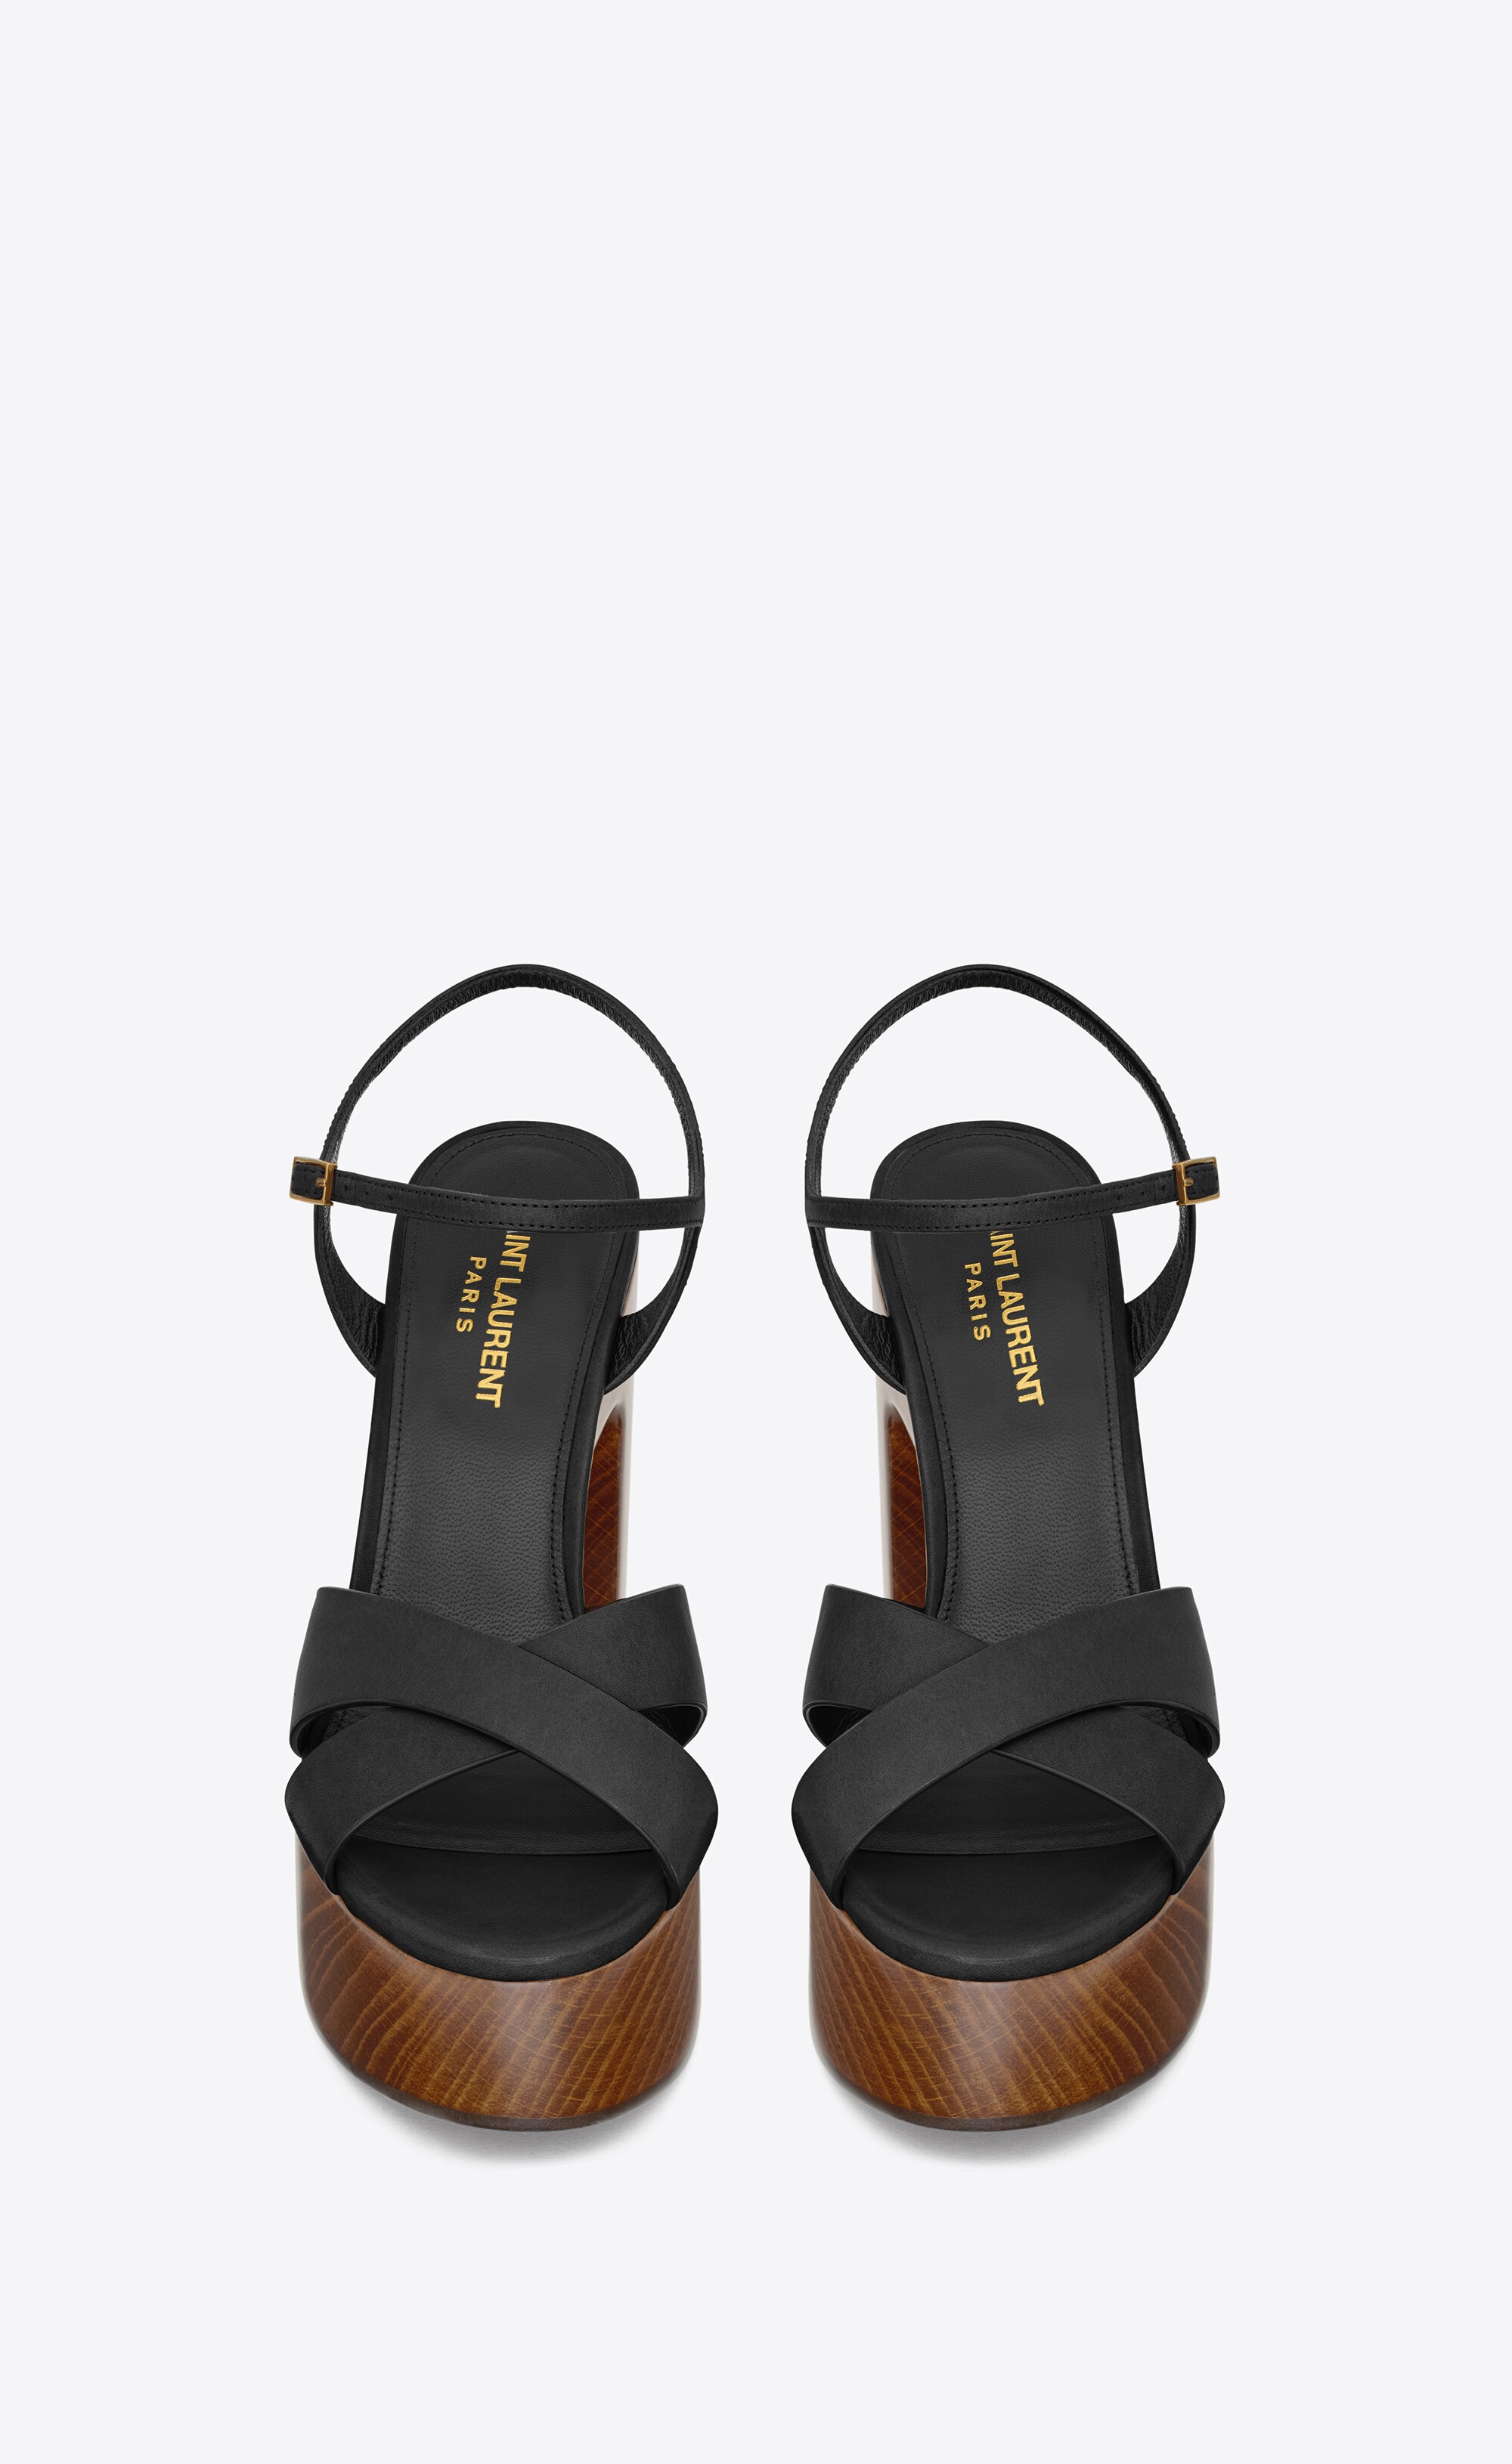 bianca platform sandals in smooth leather - 2